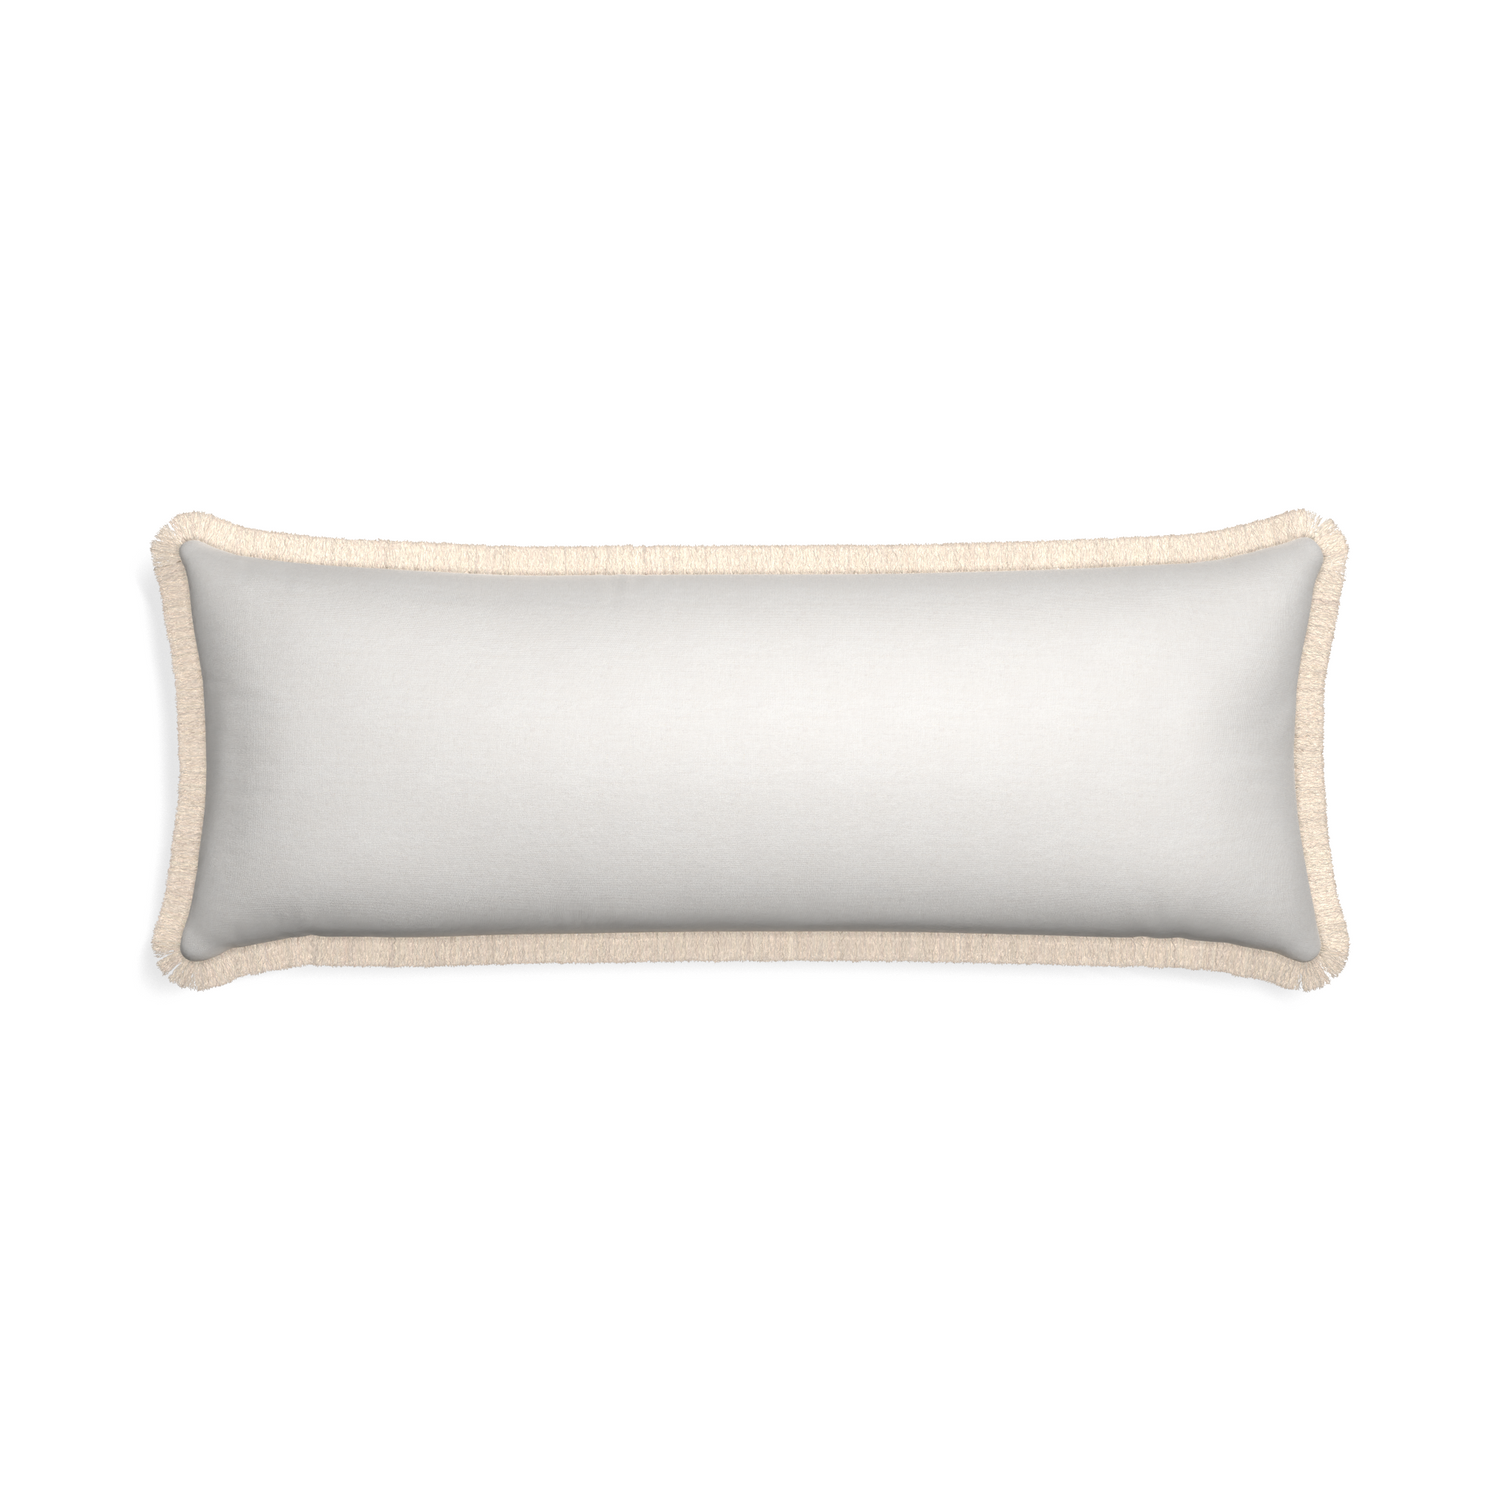 Xl-lumbar flour custom pillow with cream fringe on white background